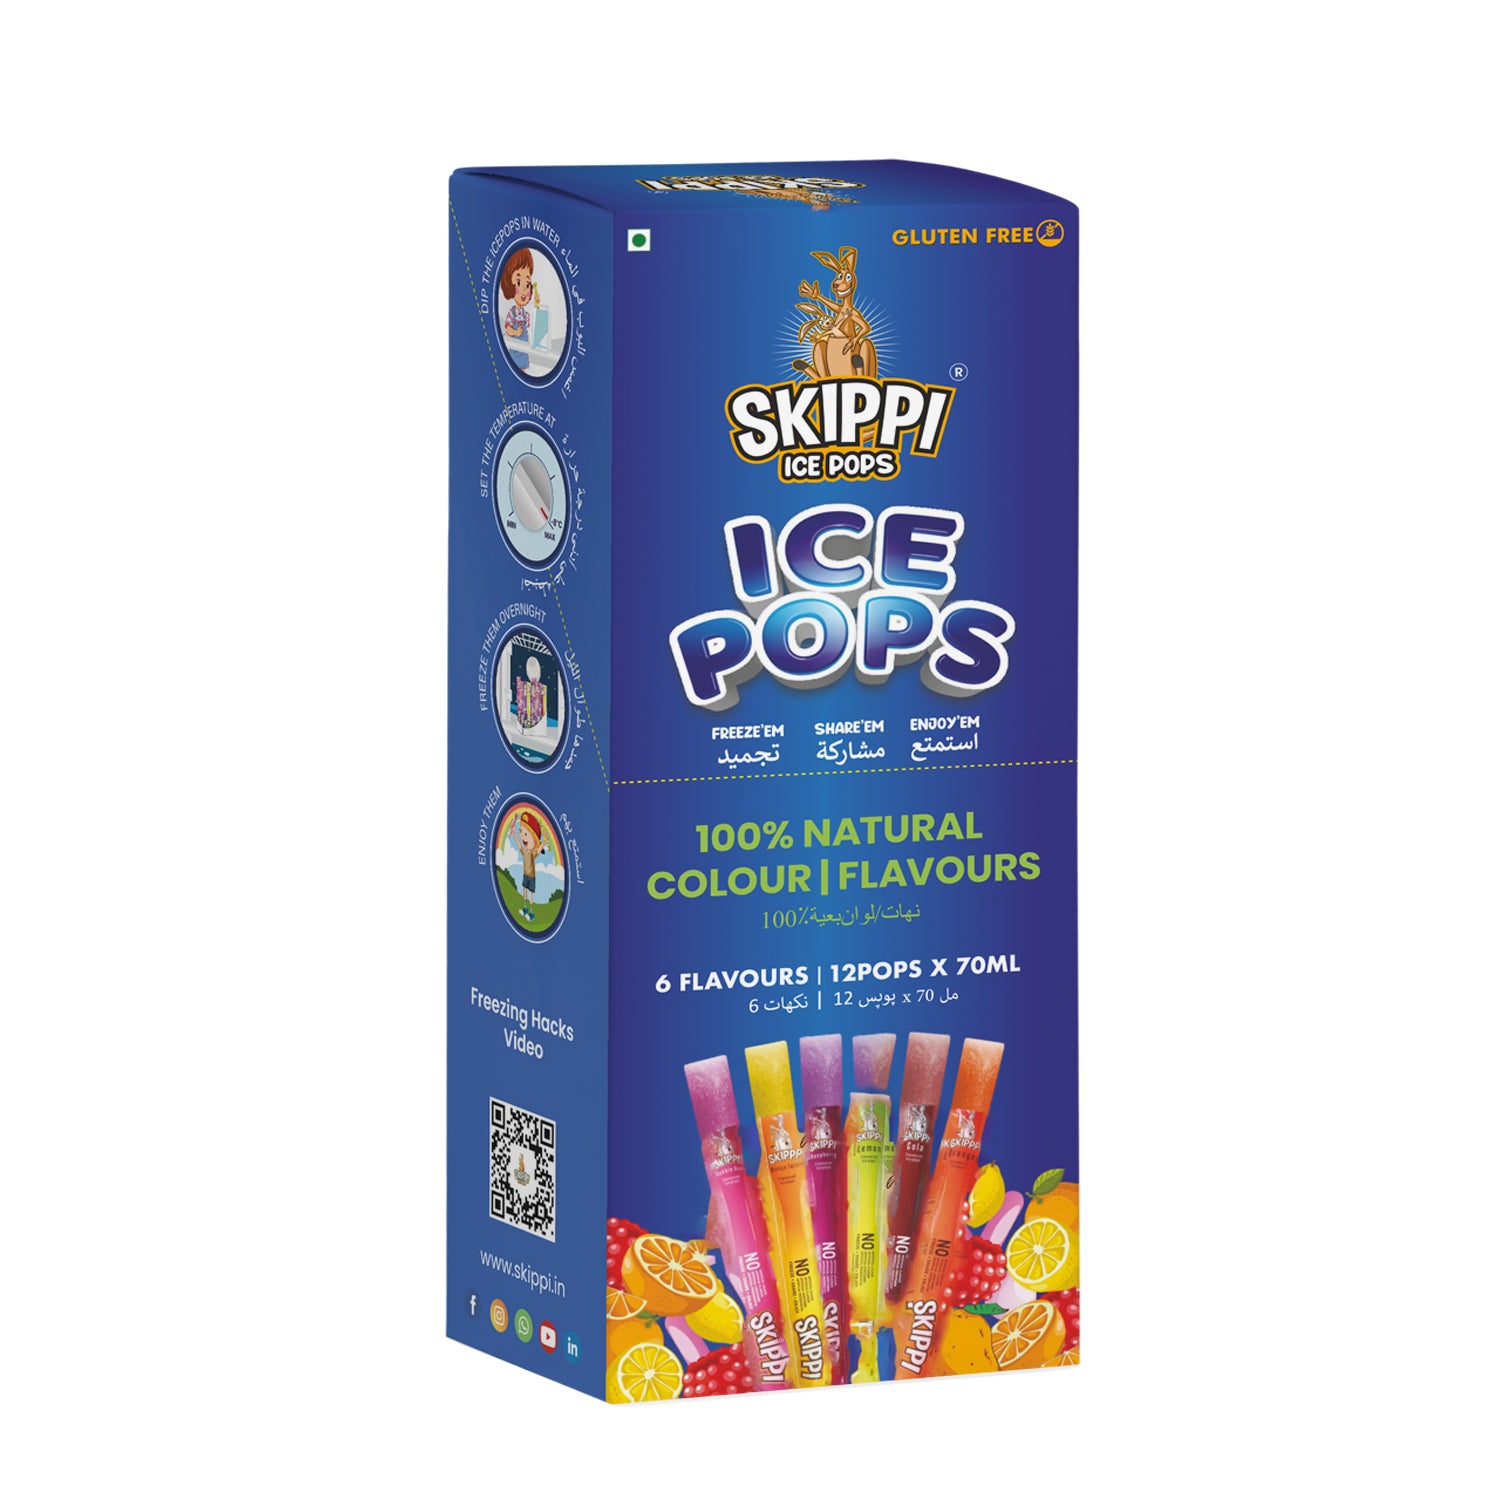 All Flavor + Desi Flavors Combo - Skippi Ice Pops